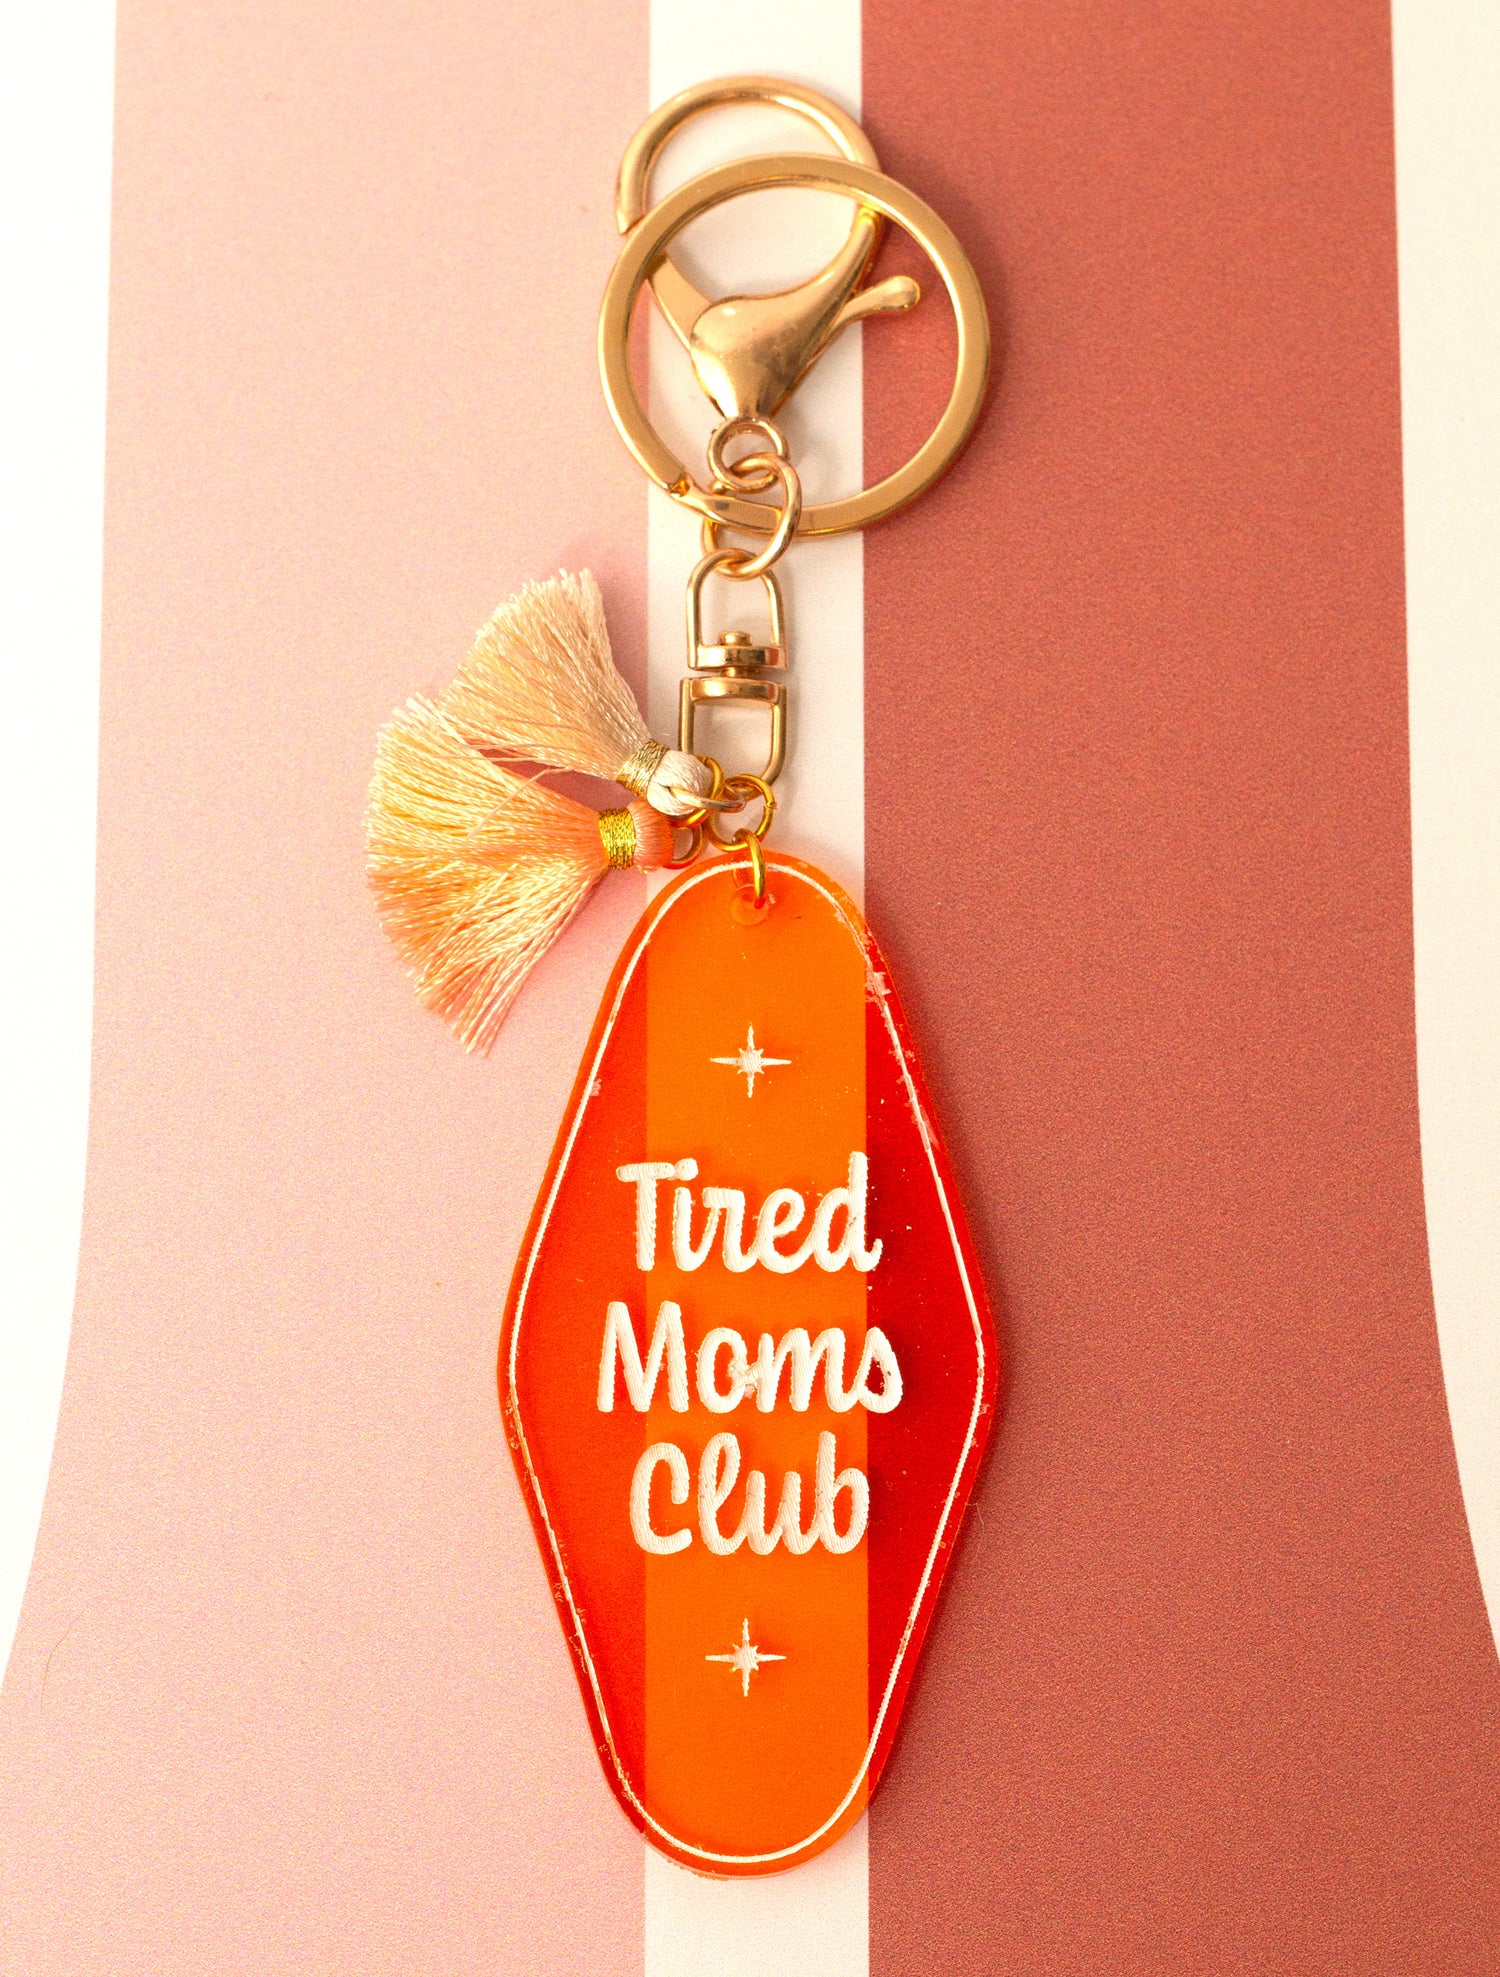 Tired Moms Club - Vintage Style Acrylic Keychain